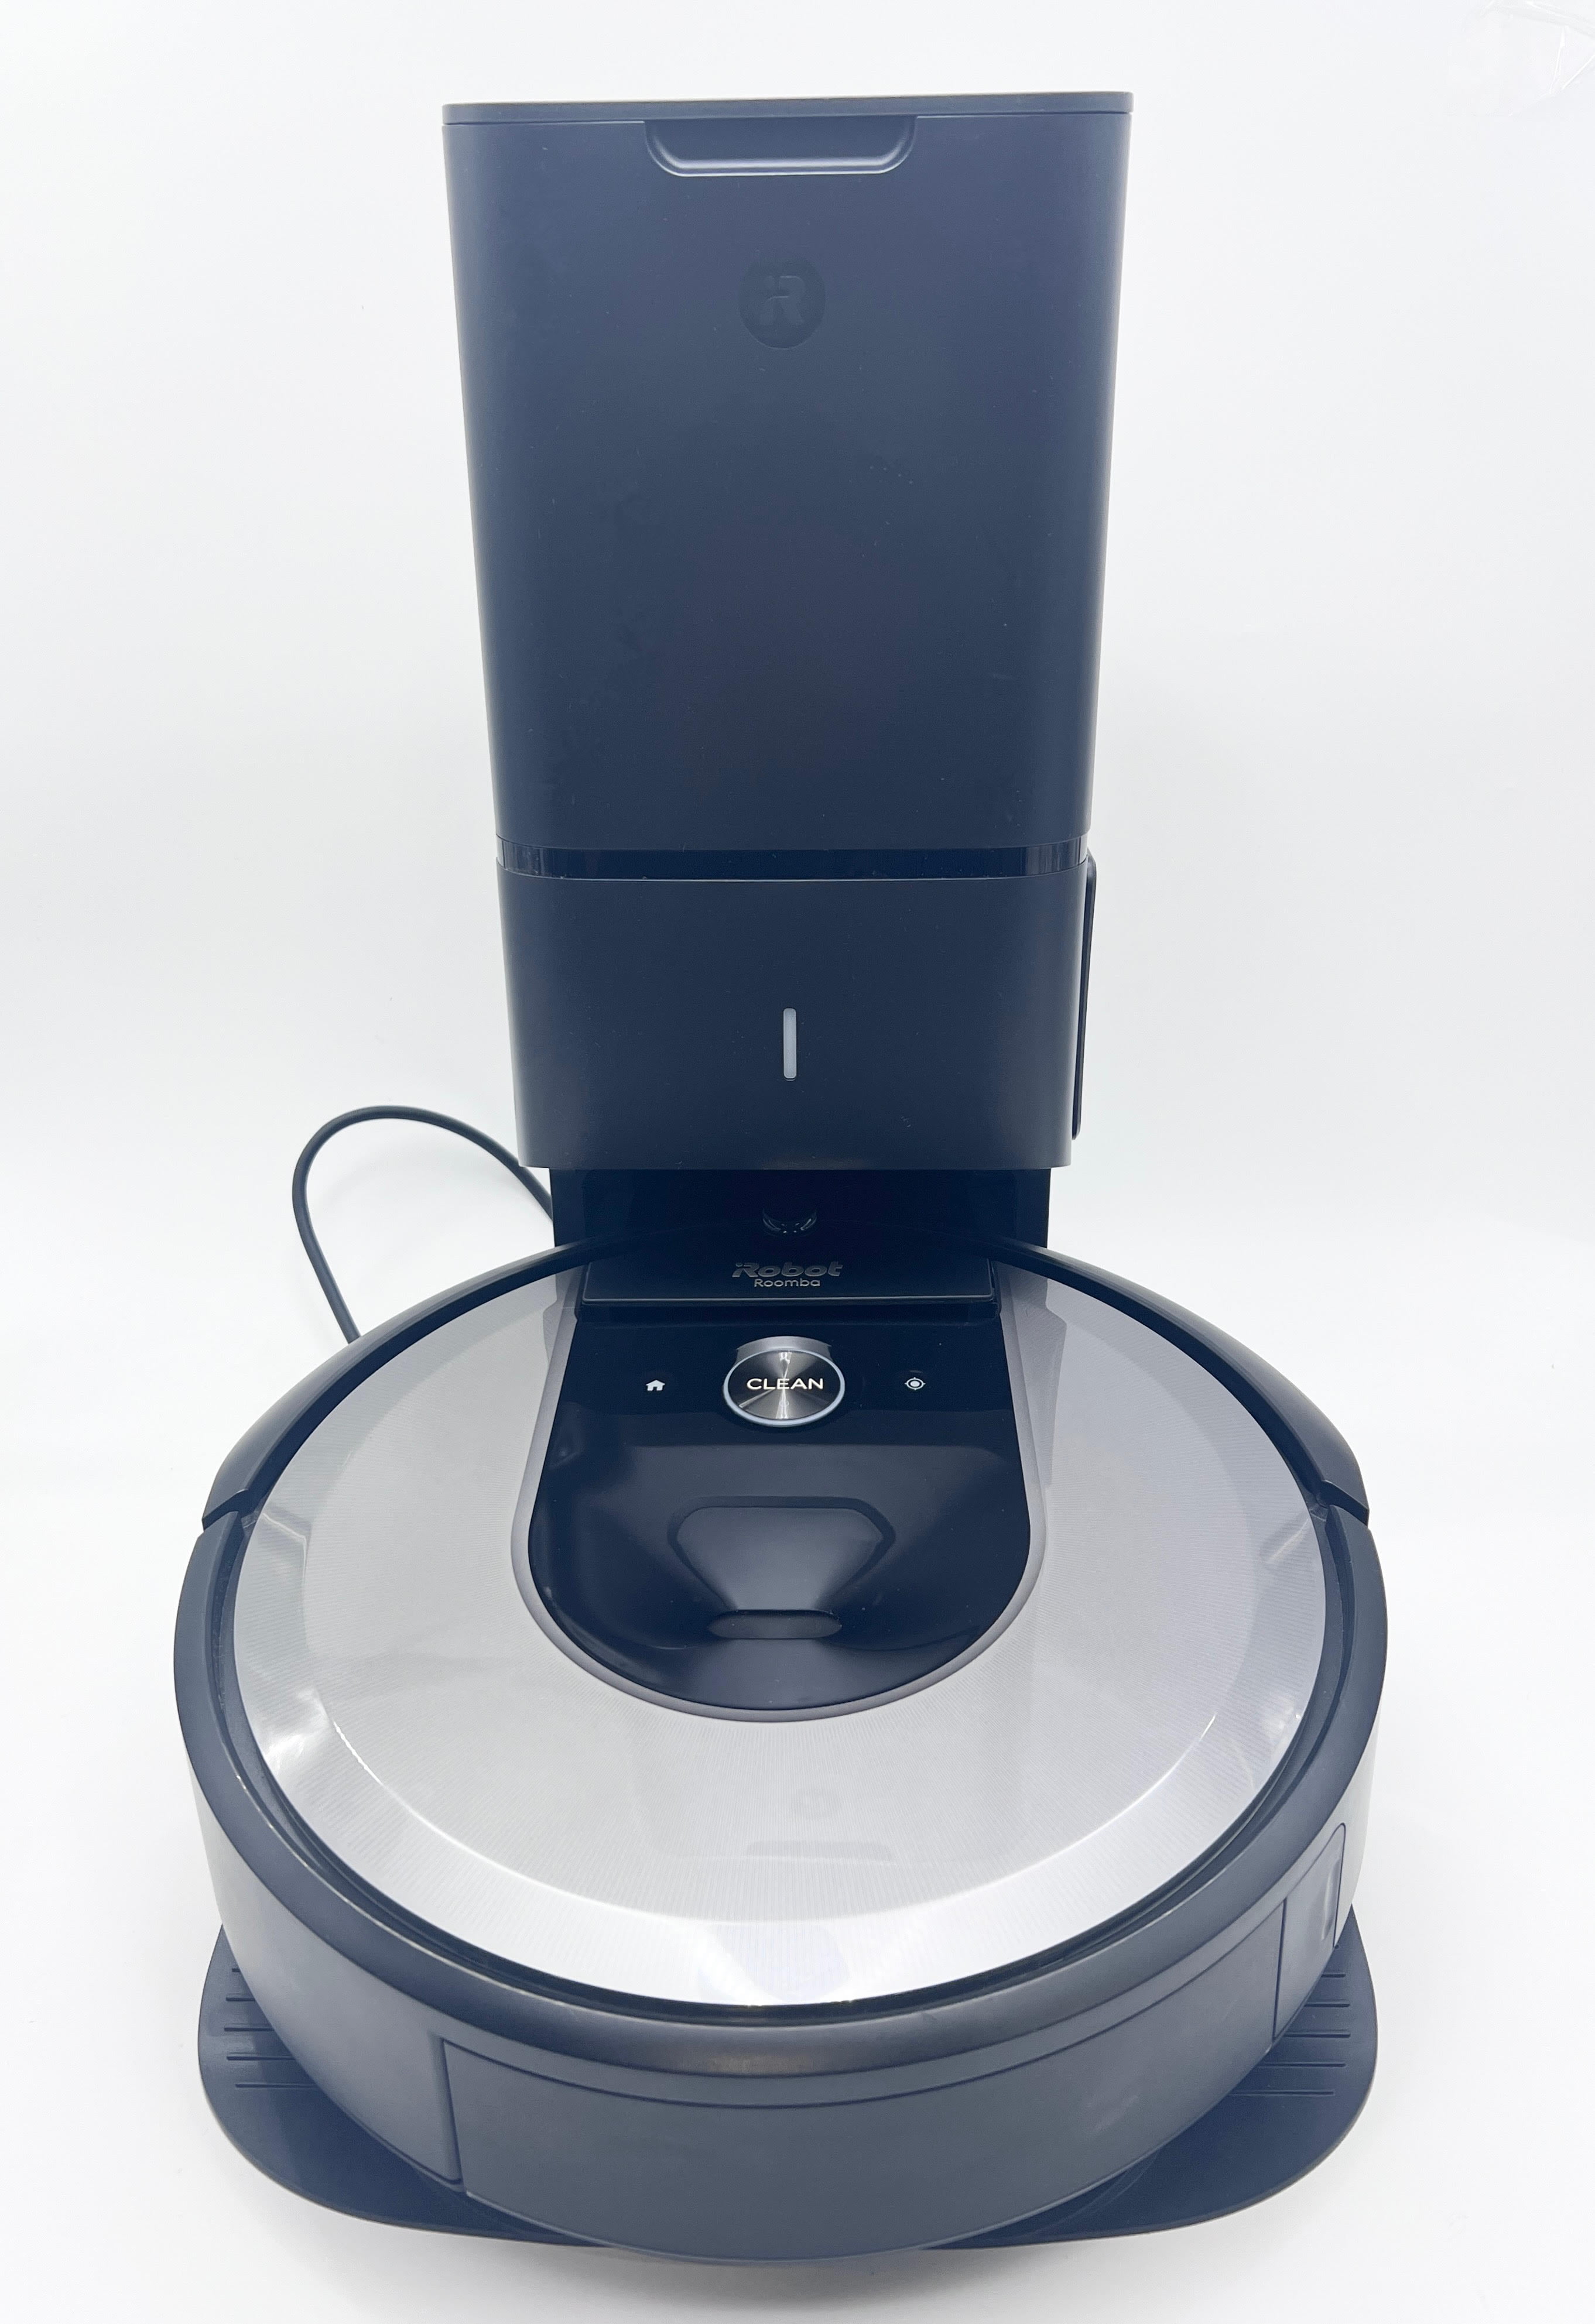 Comprar Aspirador Inteligente iRobot Roomba i8